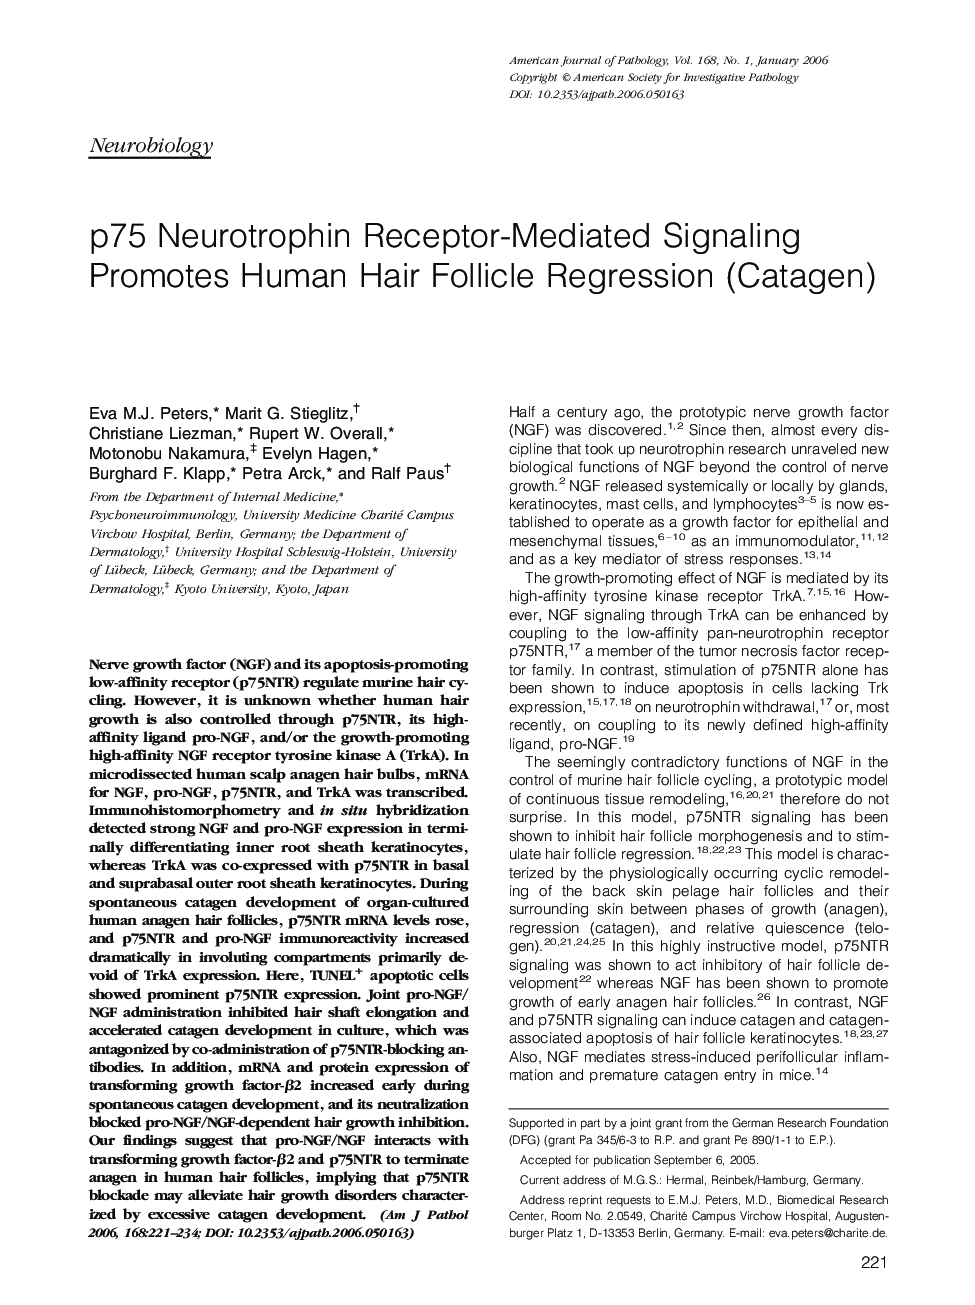 p75 Neurotrophin Receptor-Mediated Signaling Promotes Human Hair Follicle Regression (Catagen)